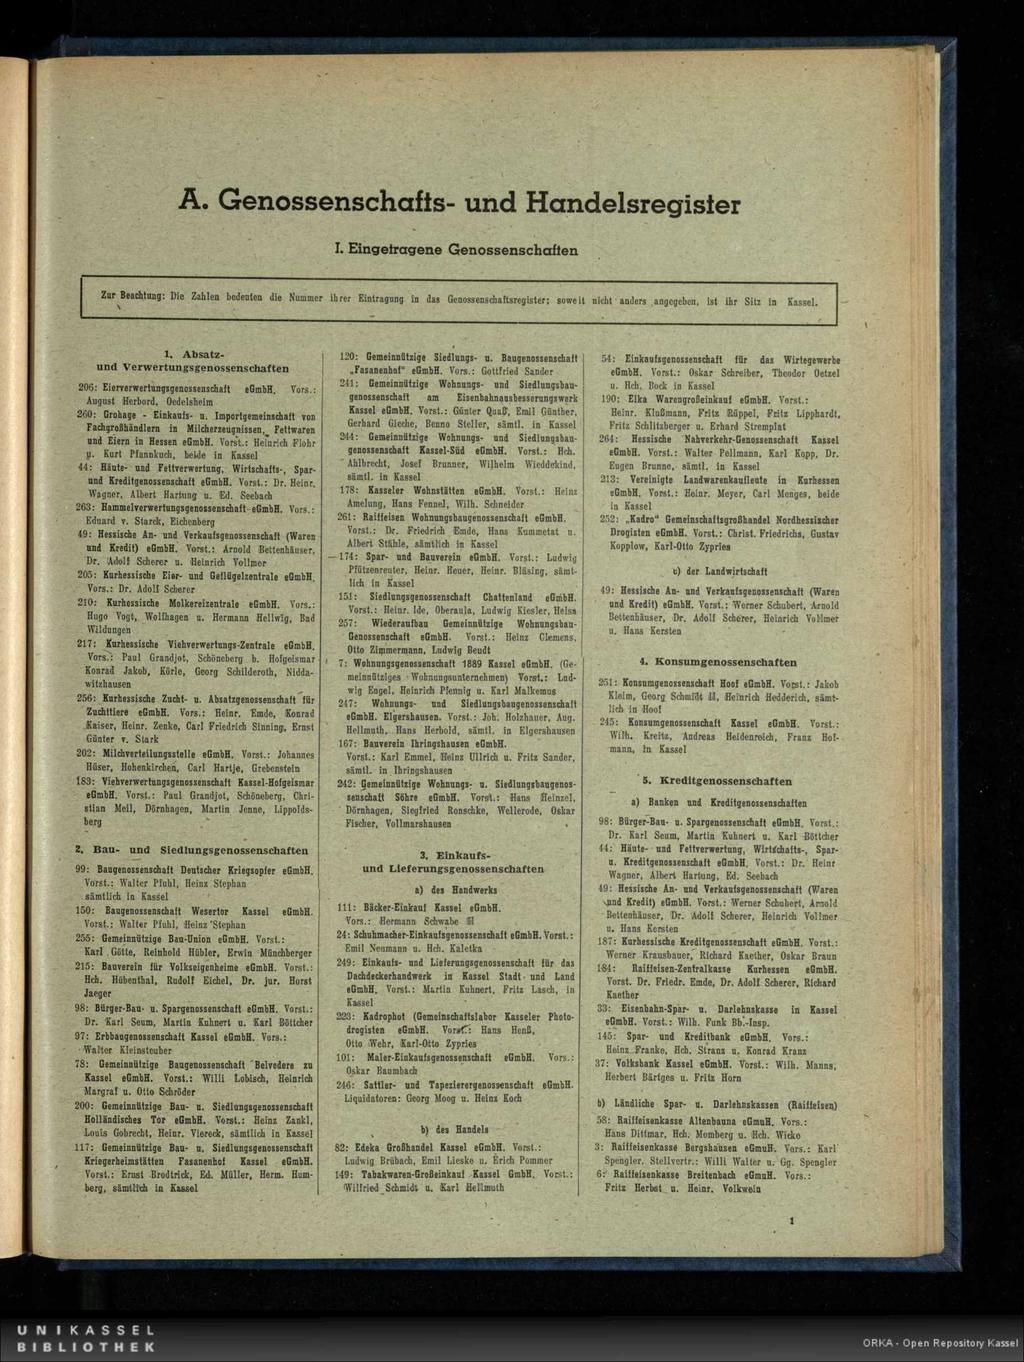 A. Genossenschafls- und Handelsregister I.